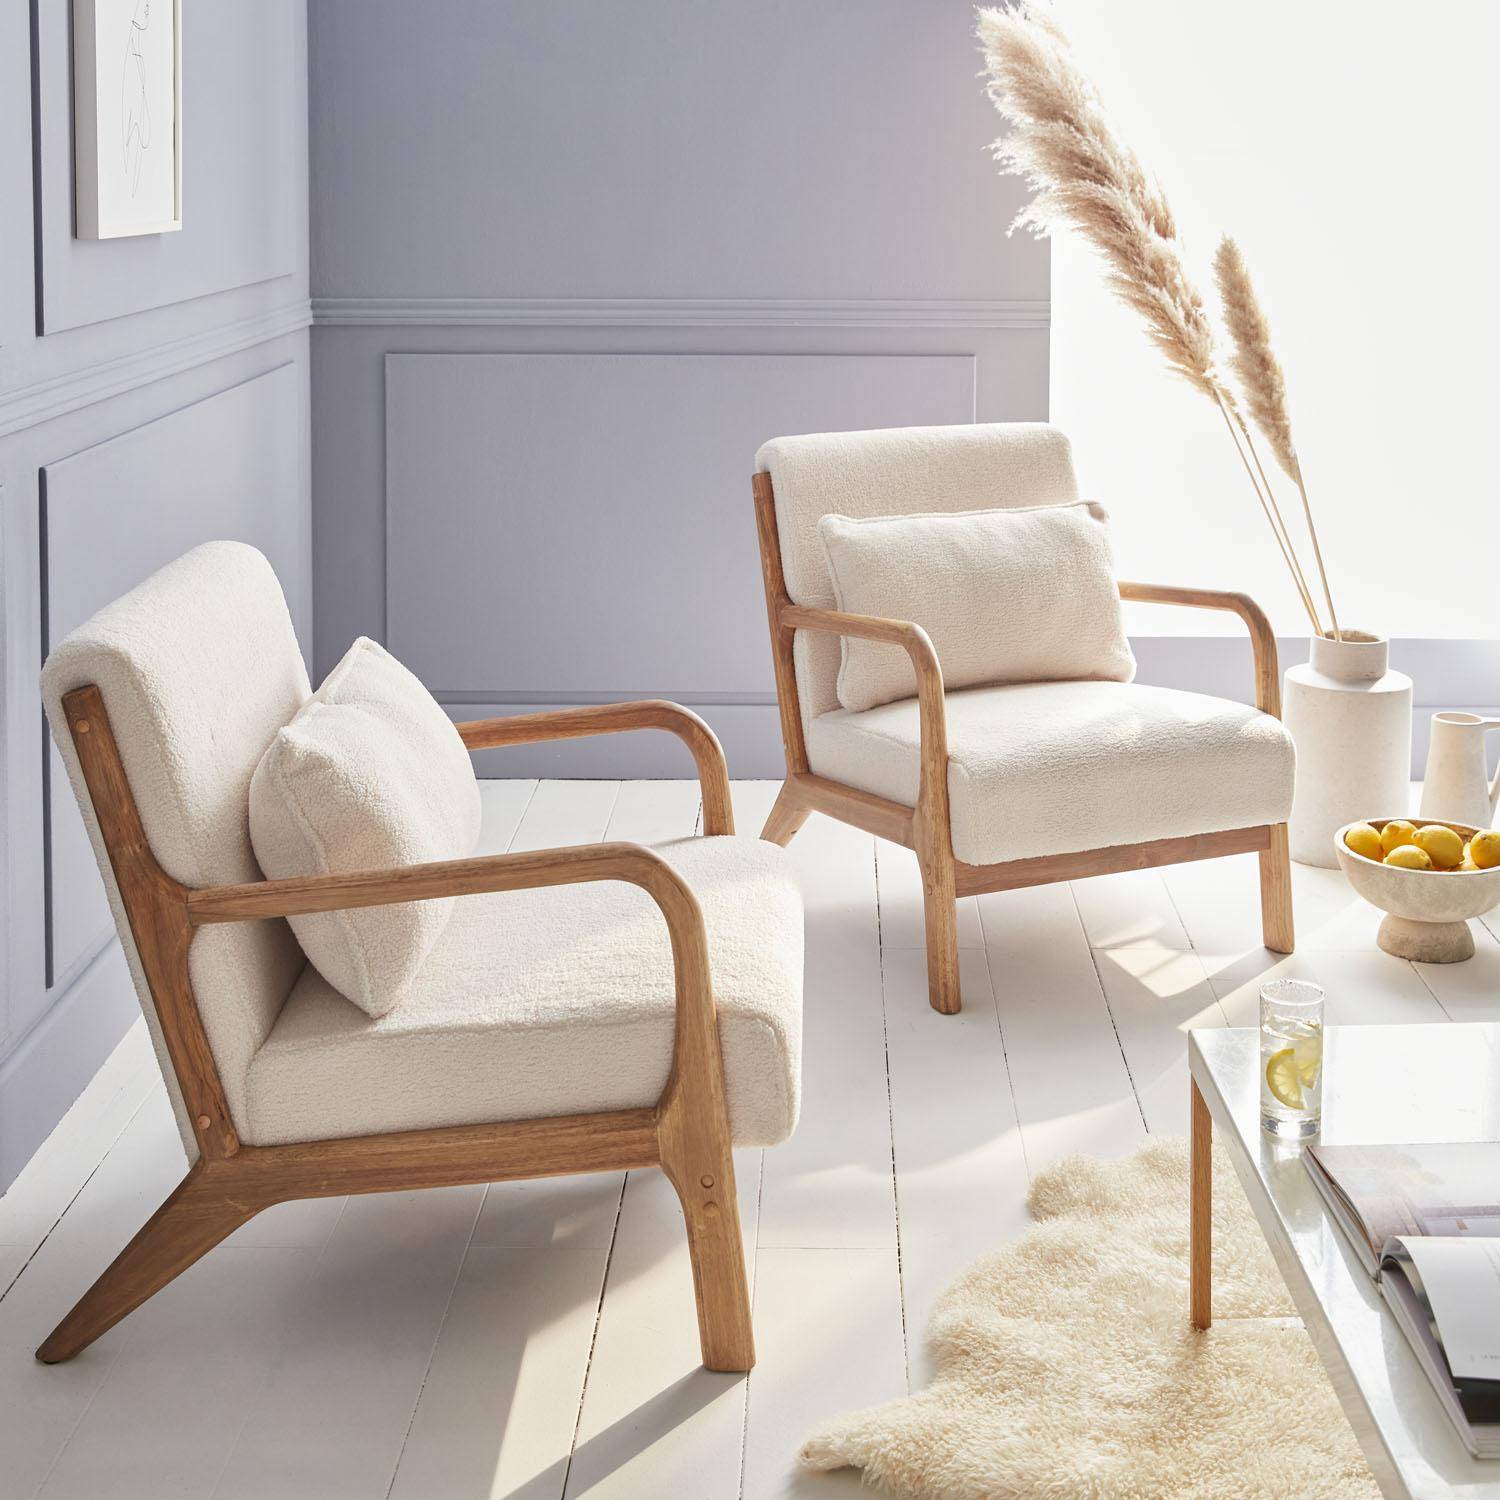 Poltrona di design in legno e tessuto bouclé, 1 seduta fissa diritta, gambe a compasso scandinave, beige,sweeek,Photo2